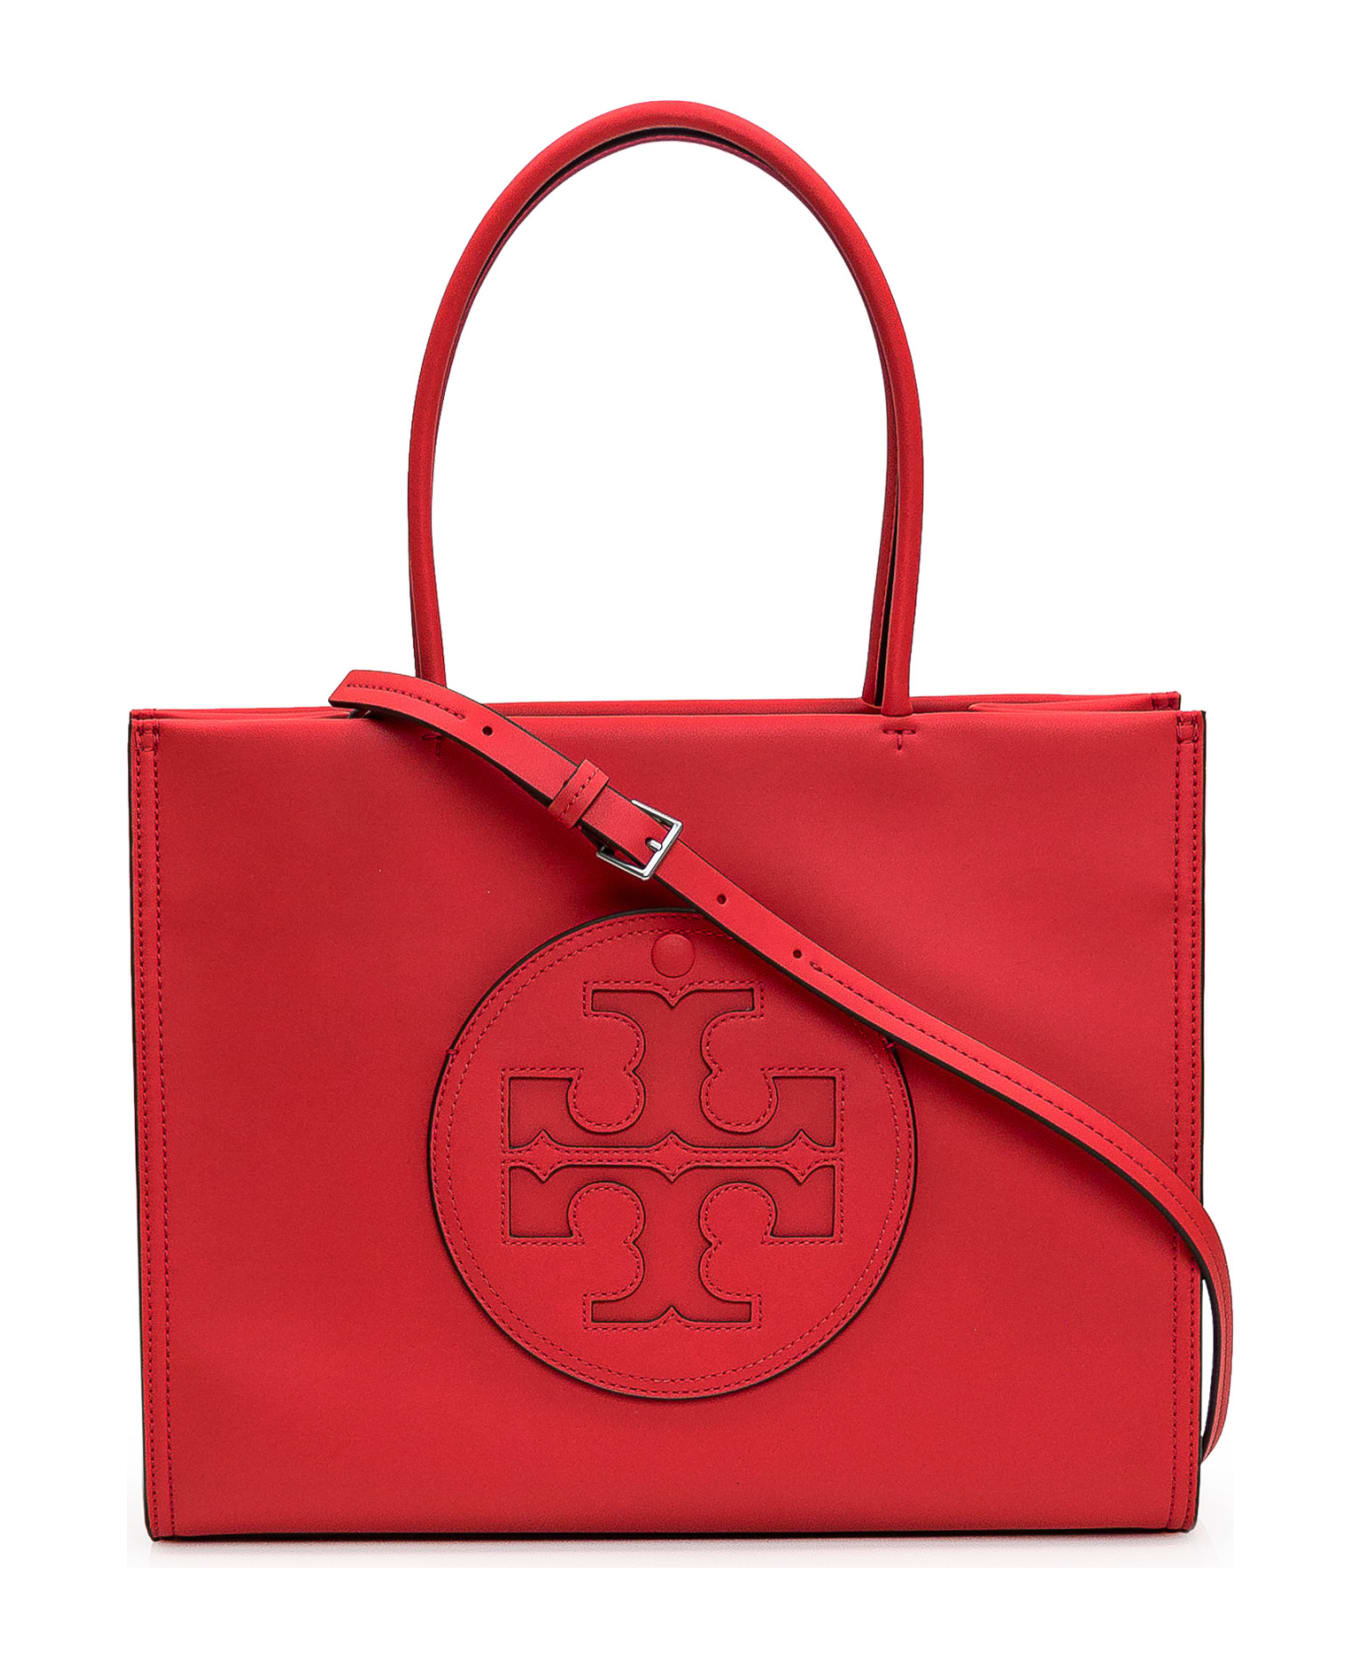 Tory Burch Shopping Bag Ella - POPPY RED トートバッグ